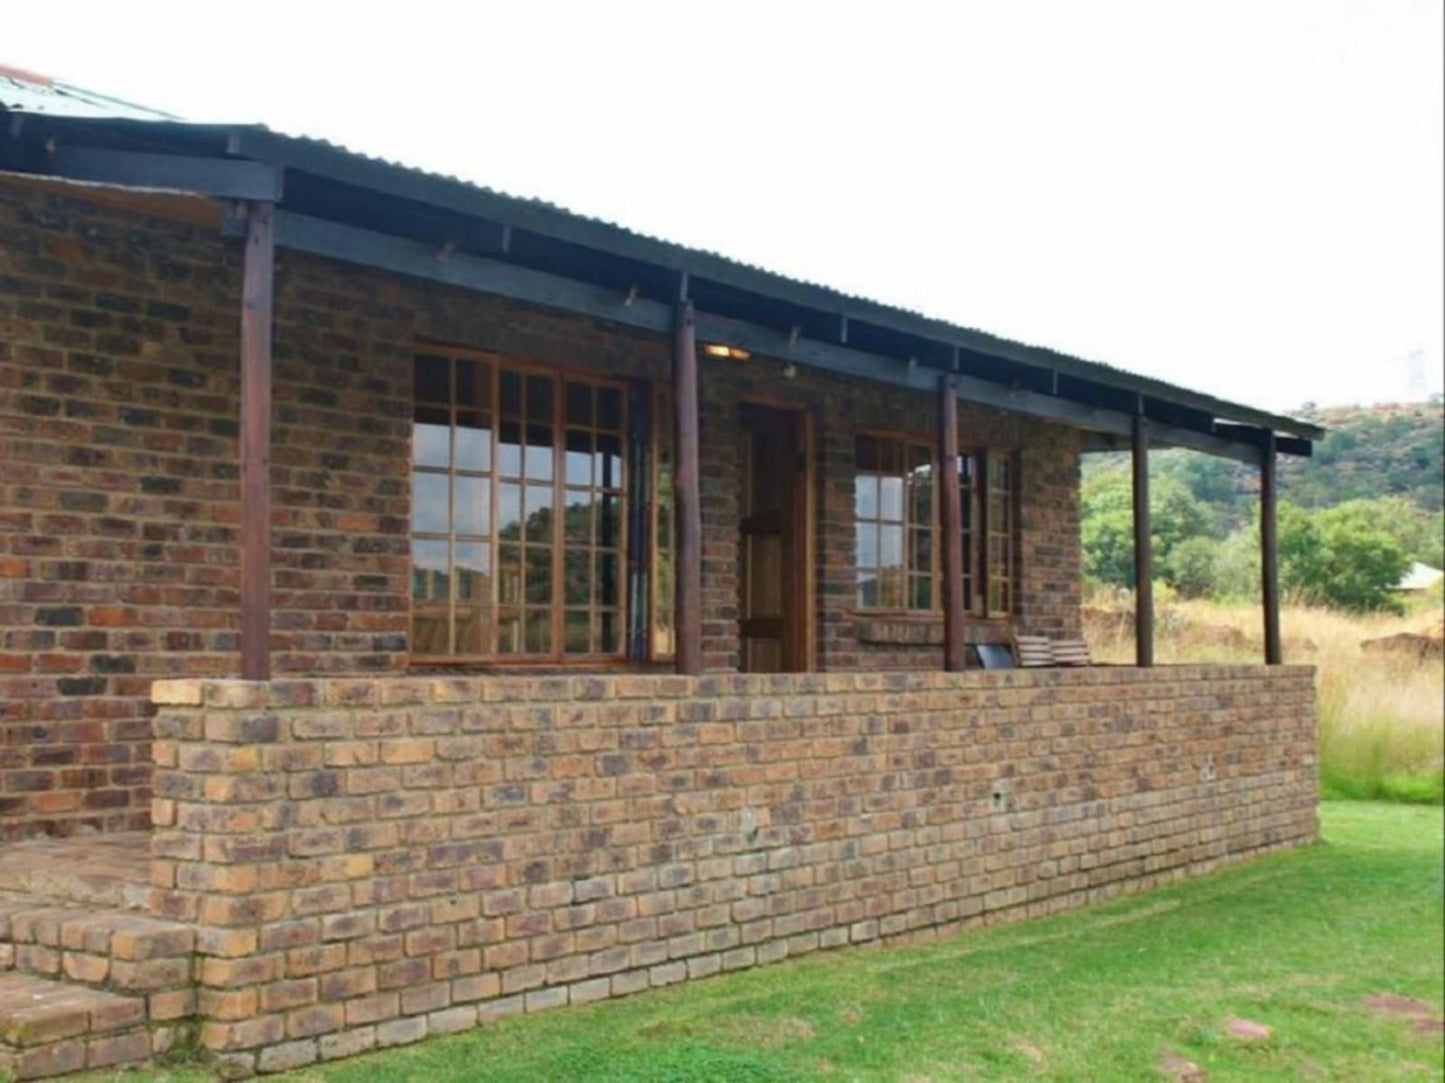 Markon River Lodge Bronkhorstspruit Gauteng South Africa Cabin, Building, Architecture, Brick Texture, Texture